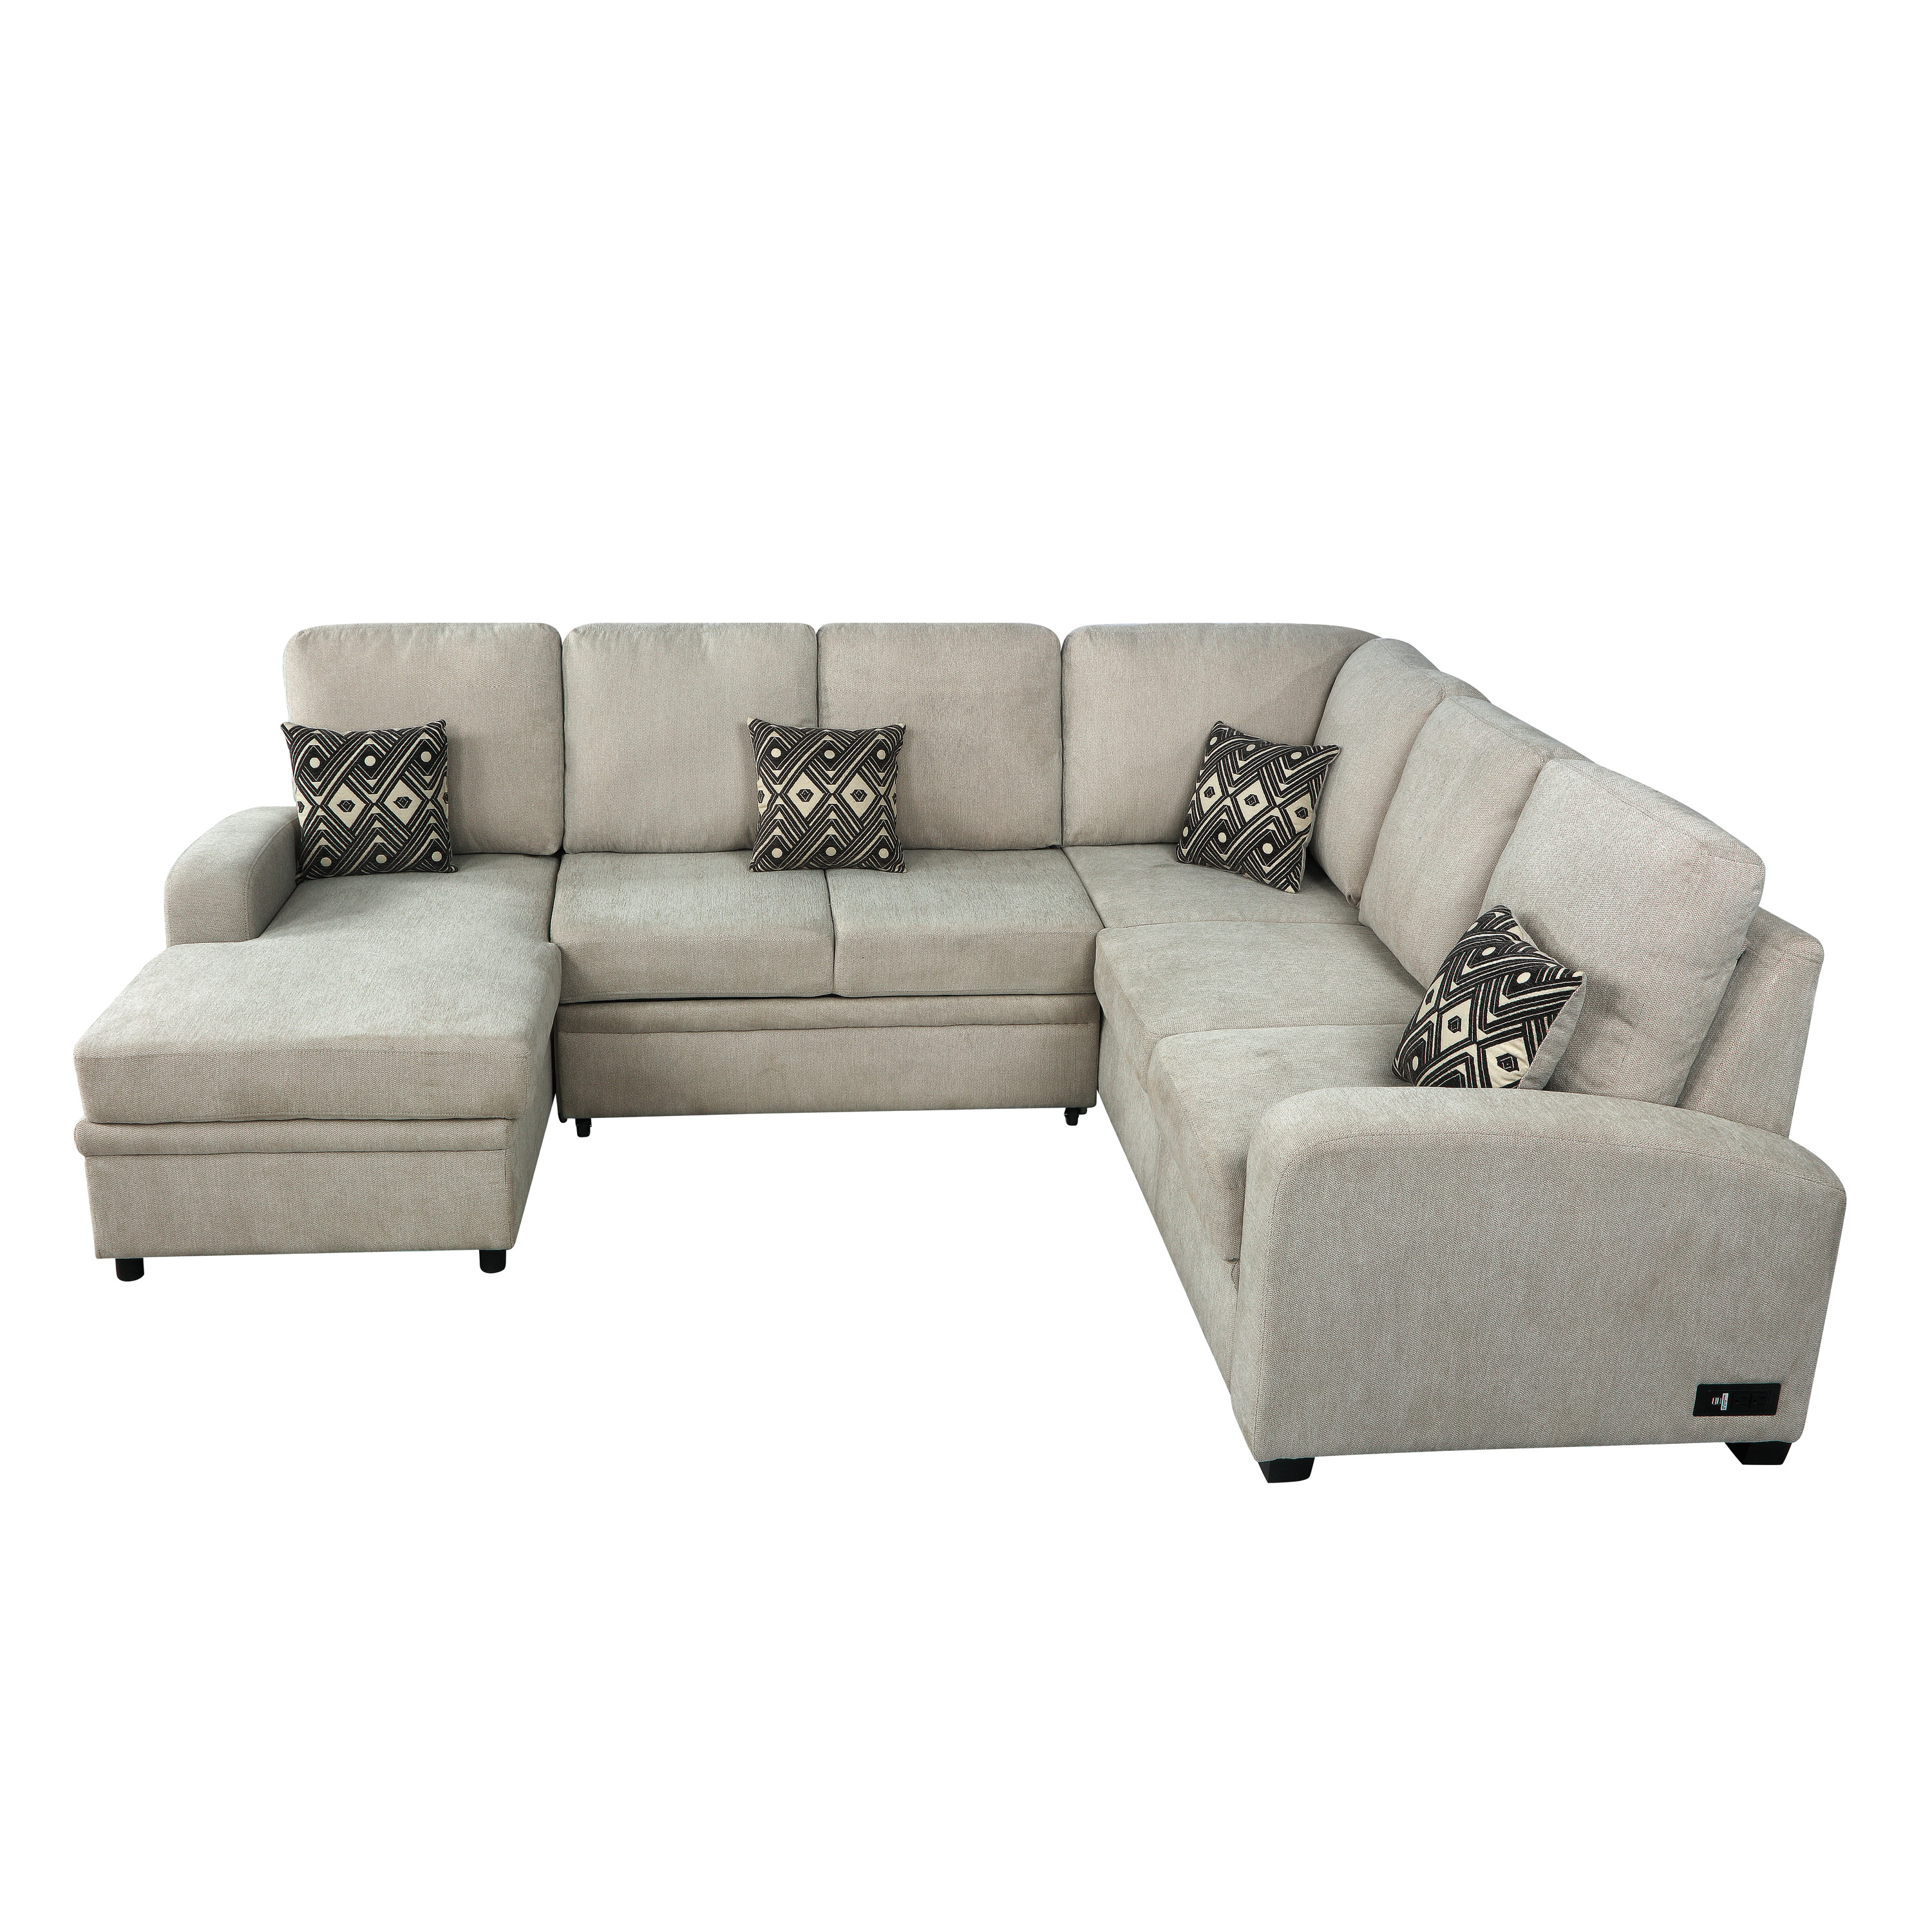 Serta Blair Multifunctional Indoor Sectional Sofa with USB & Power, Beige - image 2 of 11